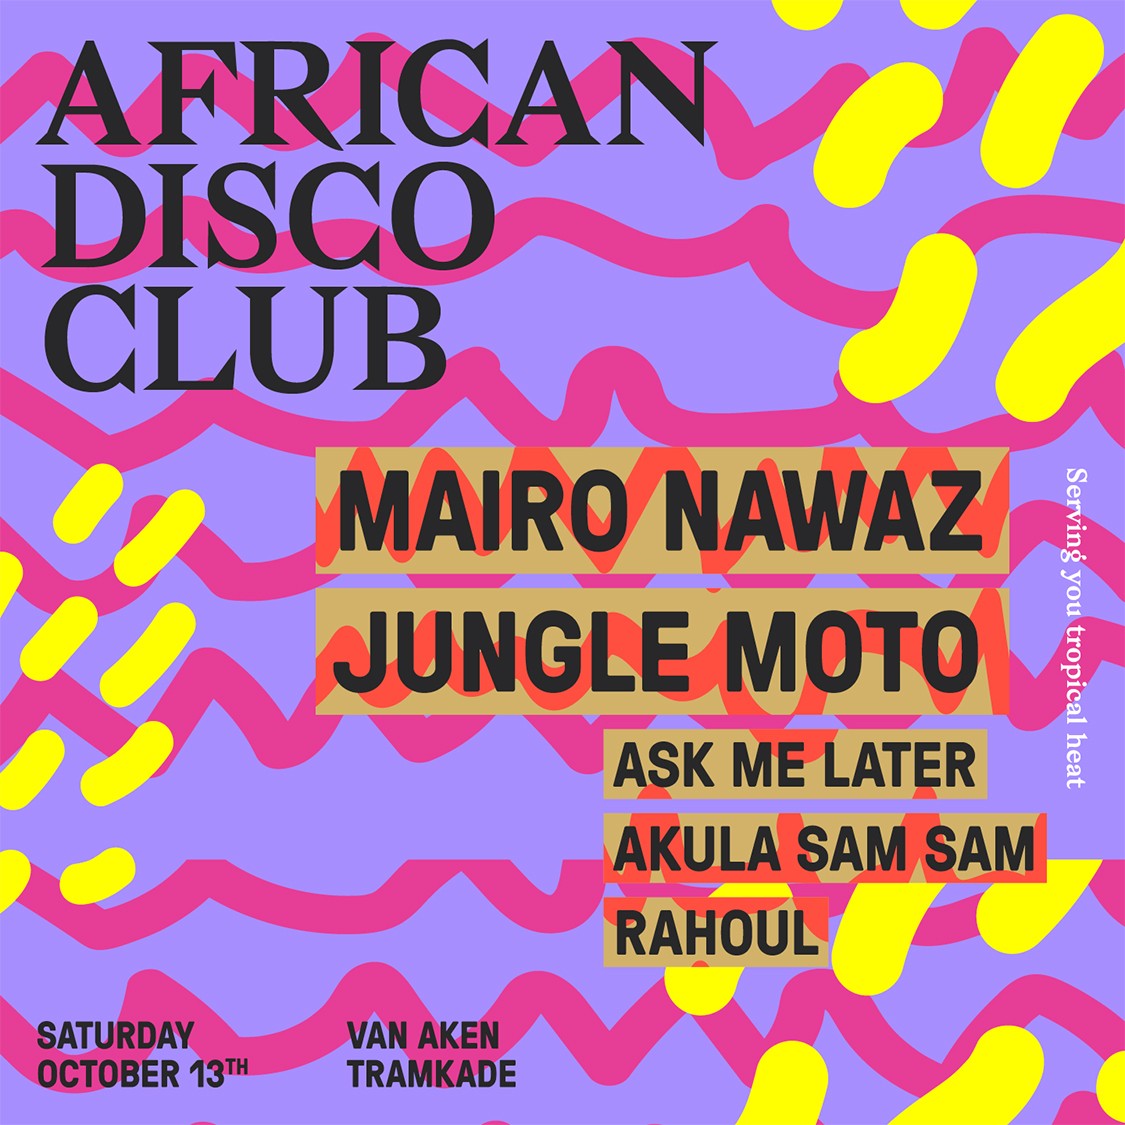 13 okt – African Disco